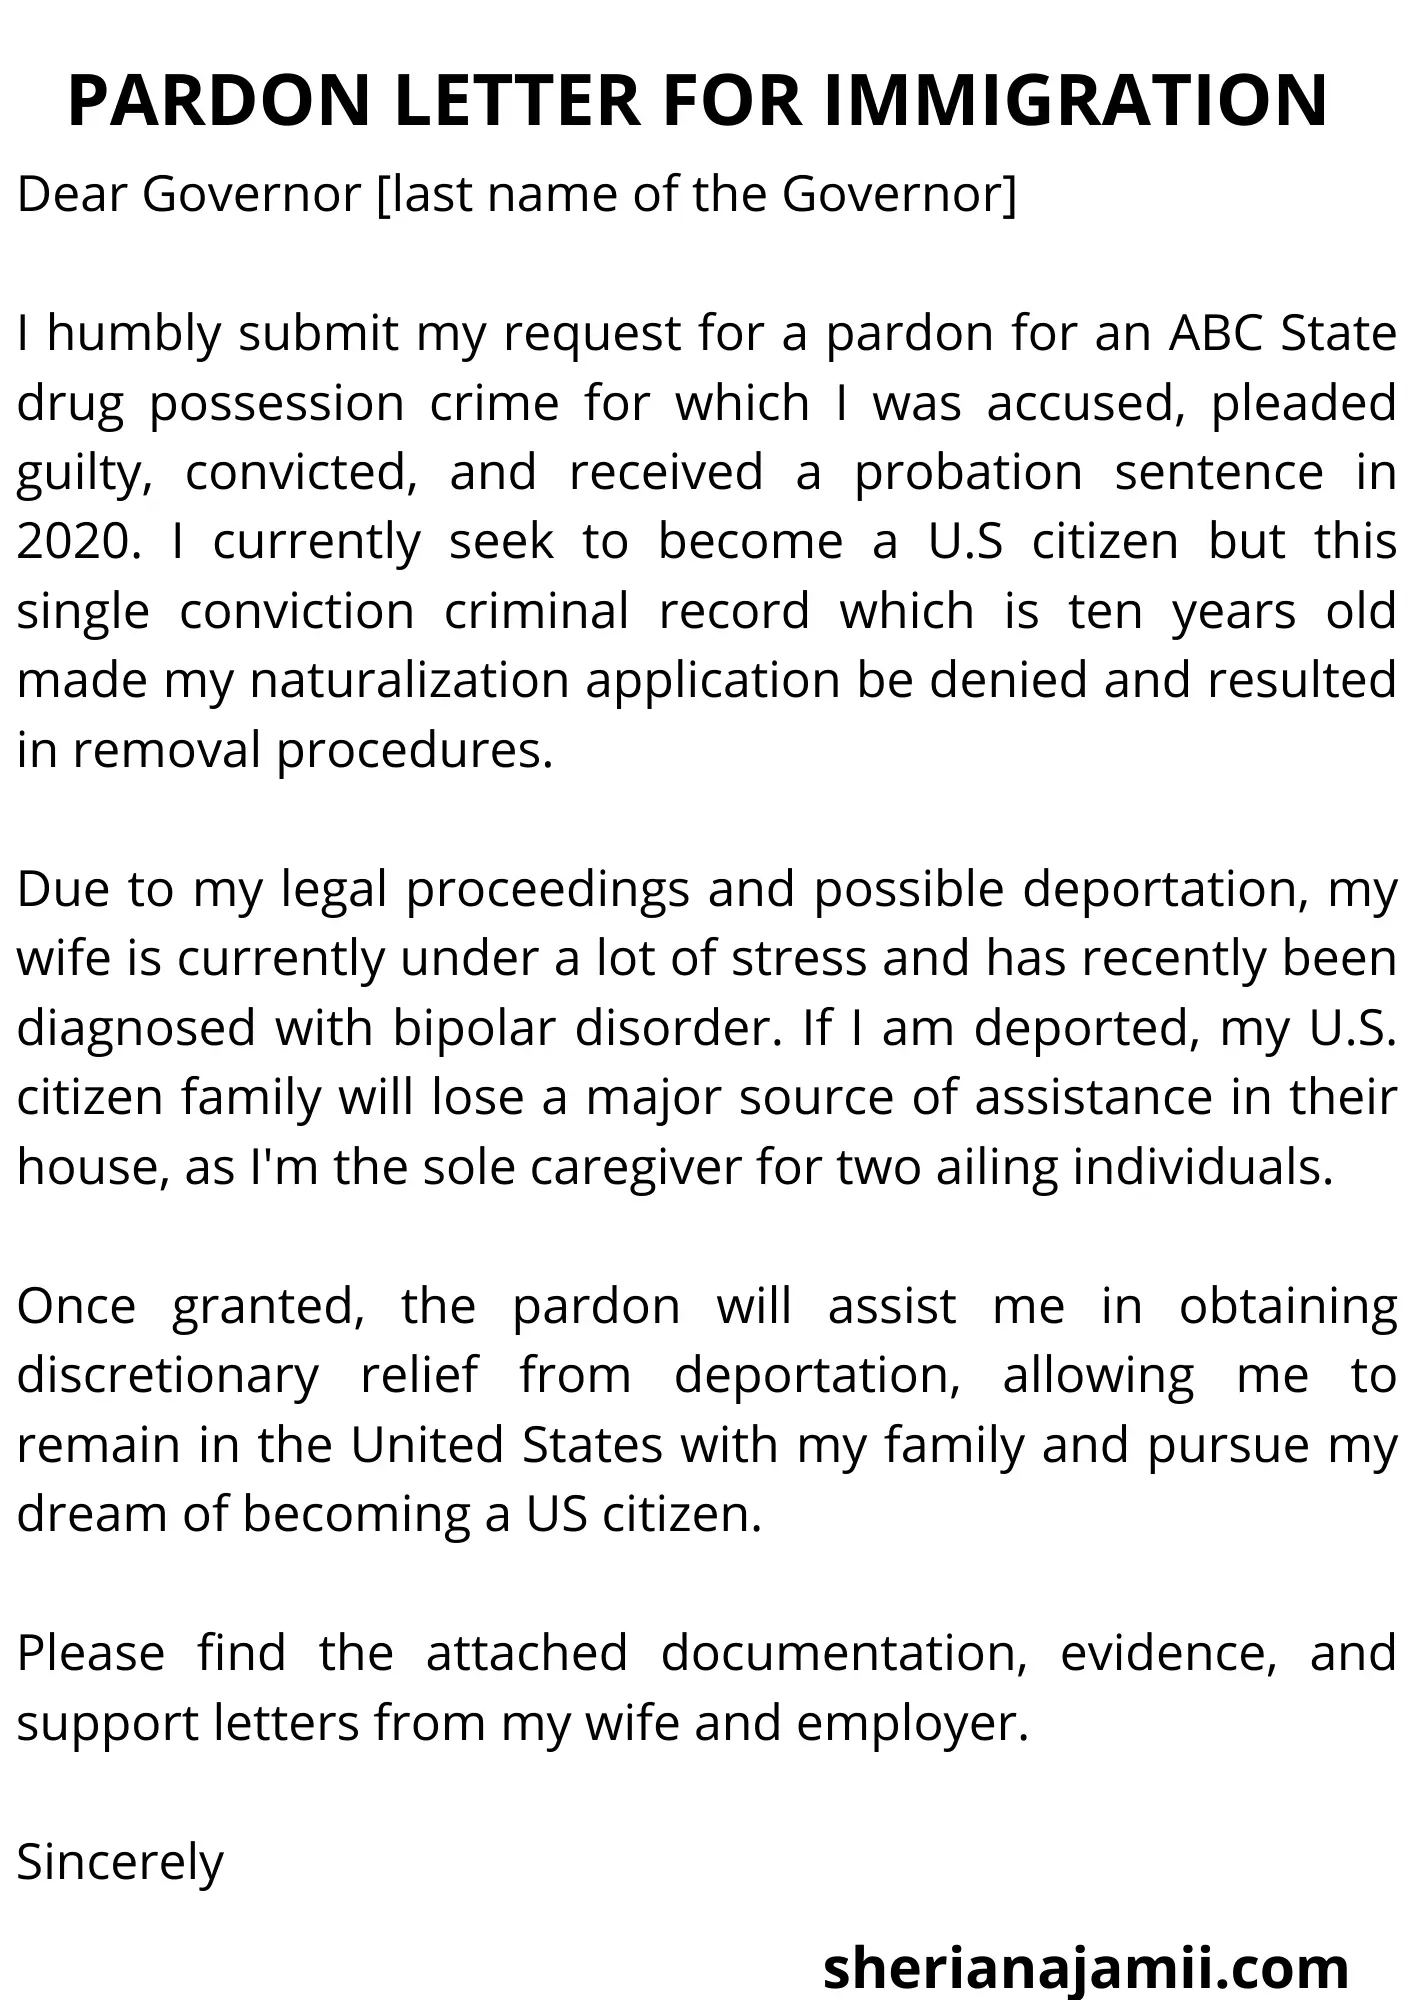 Pardon letter for immigration sample